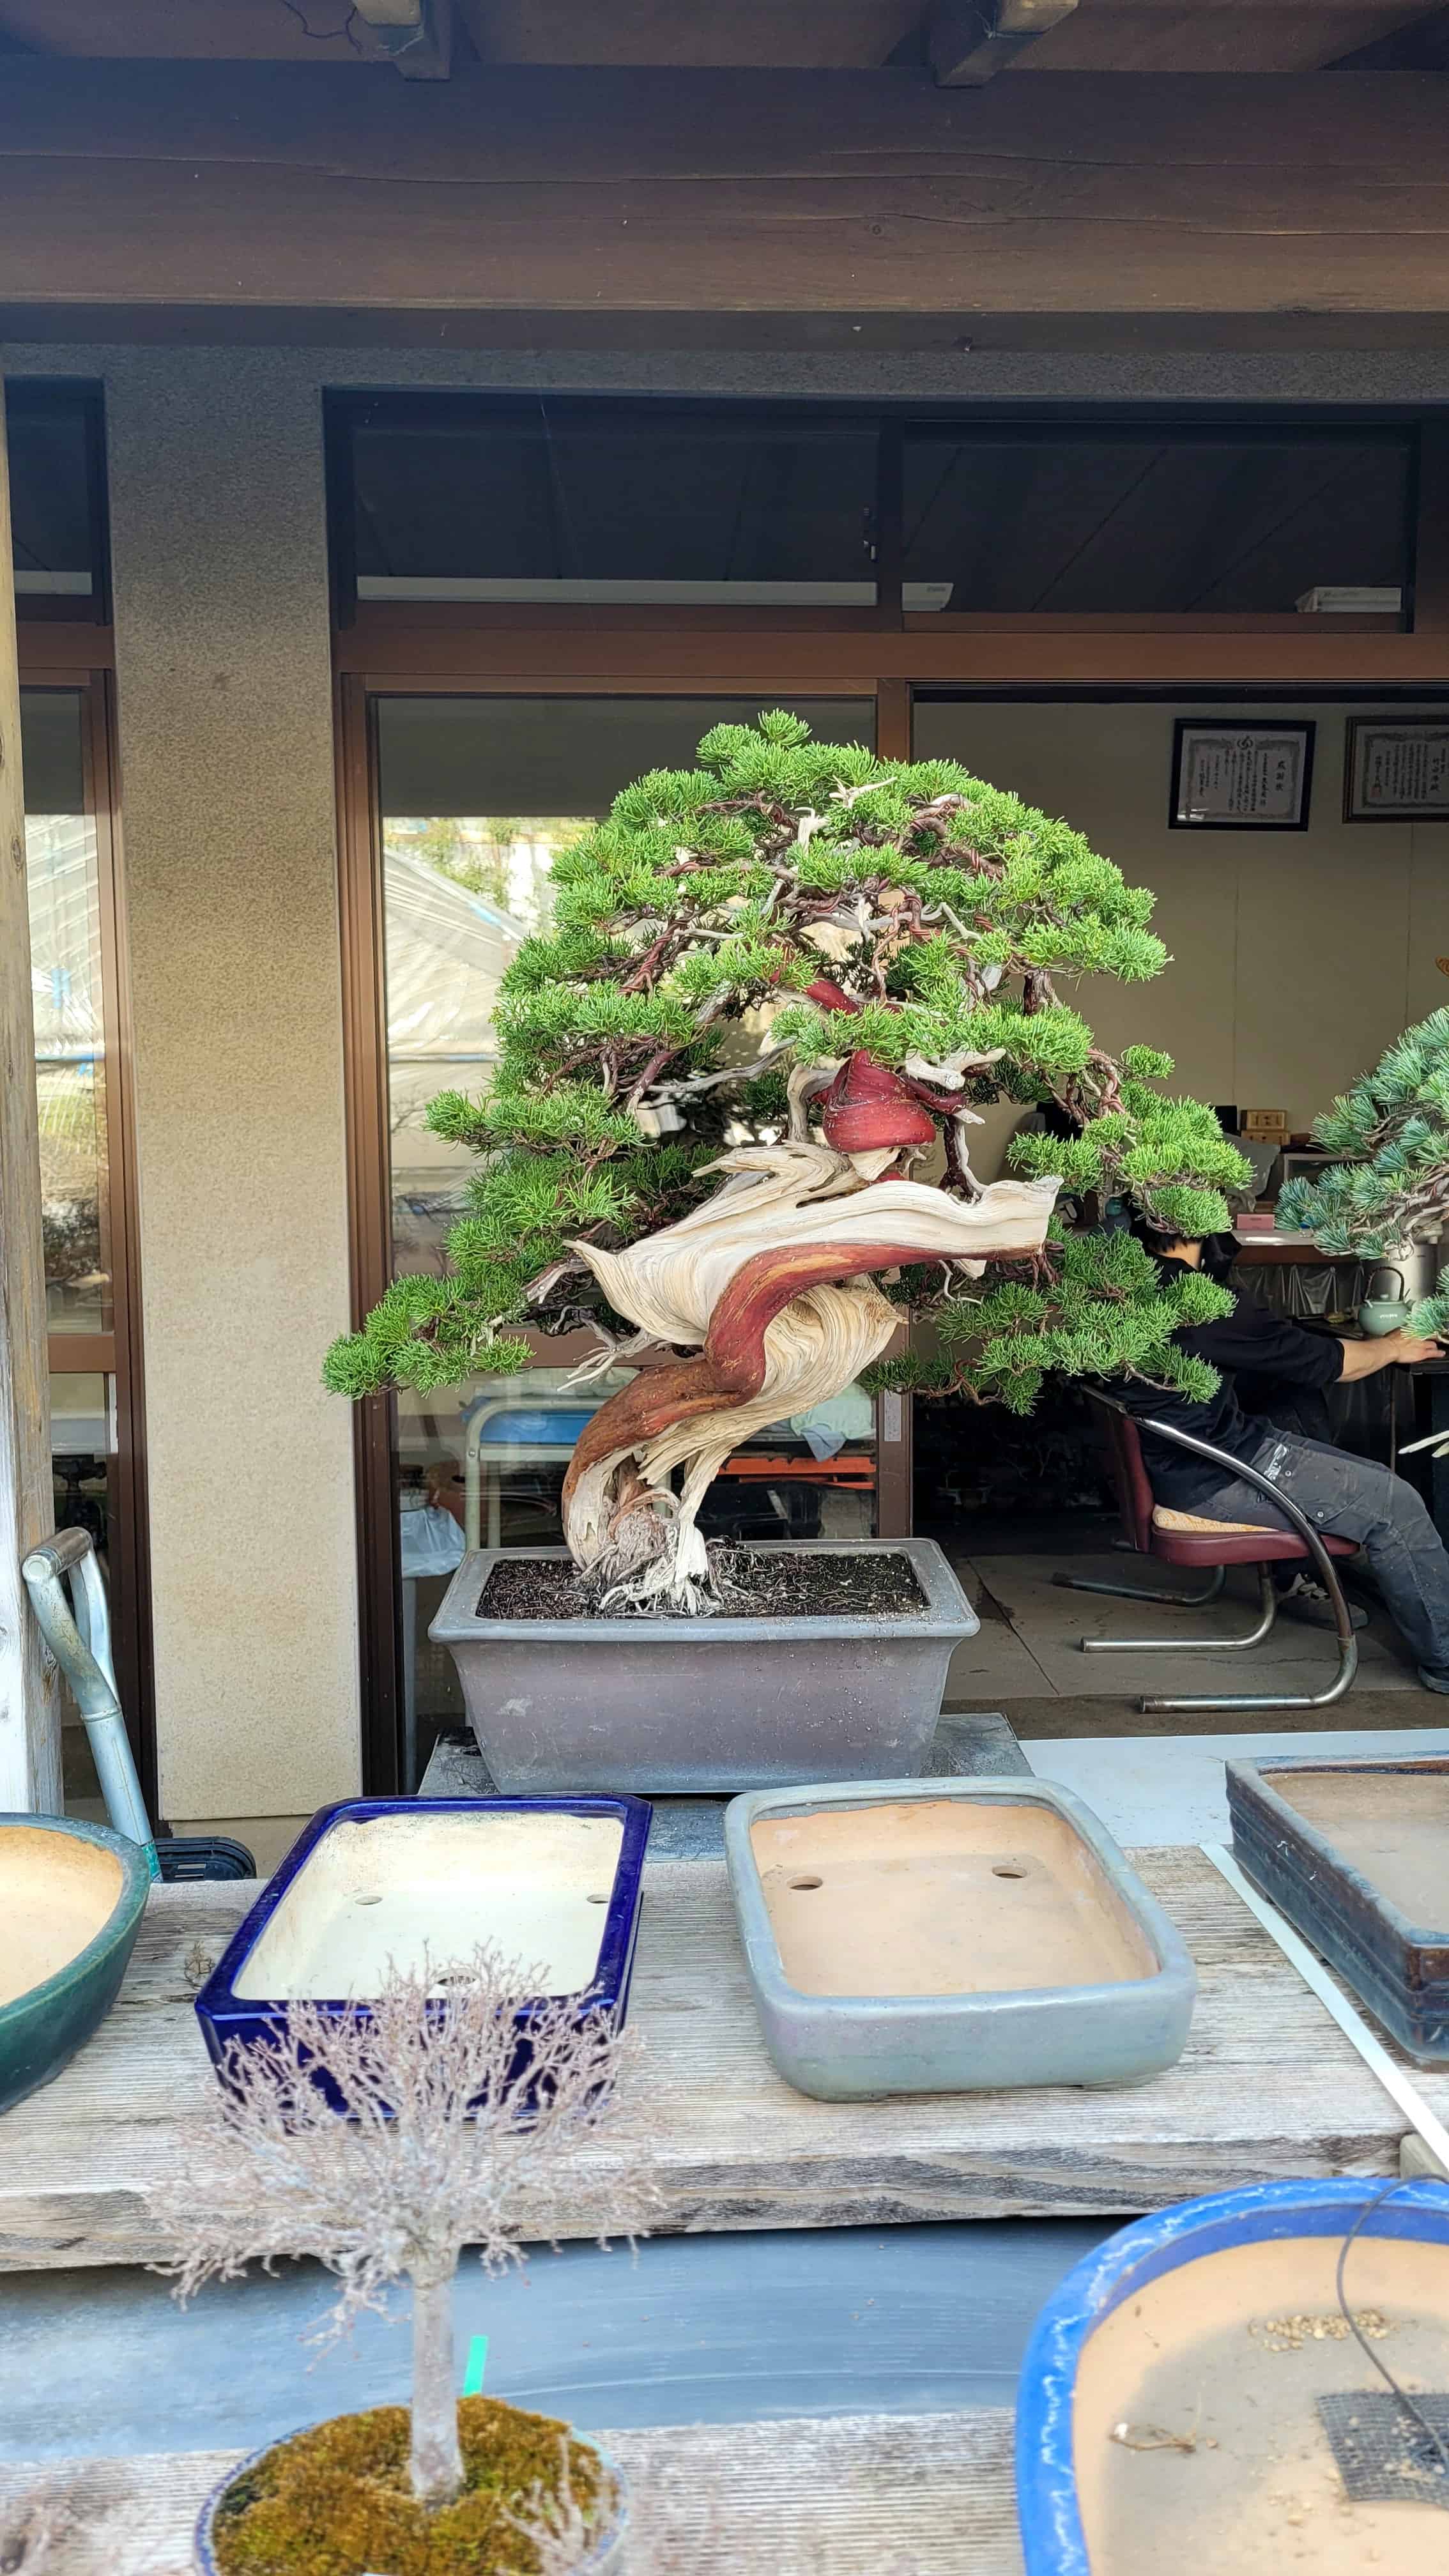 A juniper bonsai tree from omiya in Japan